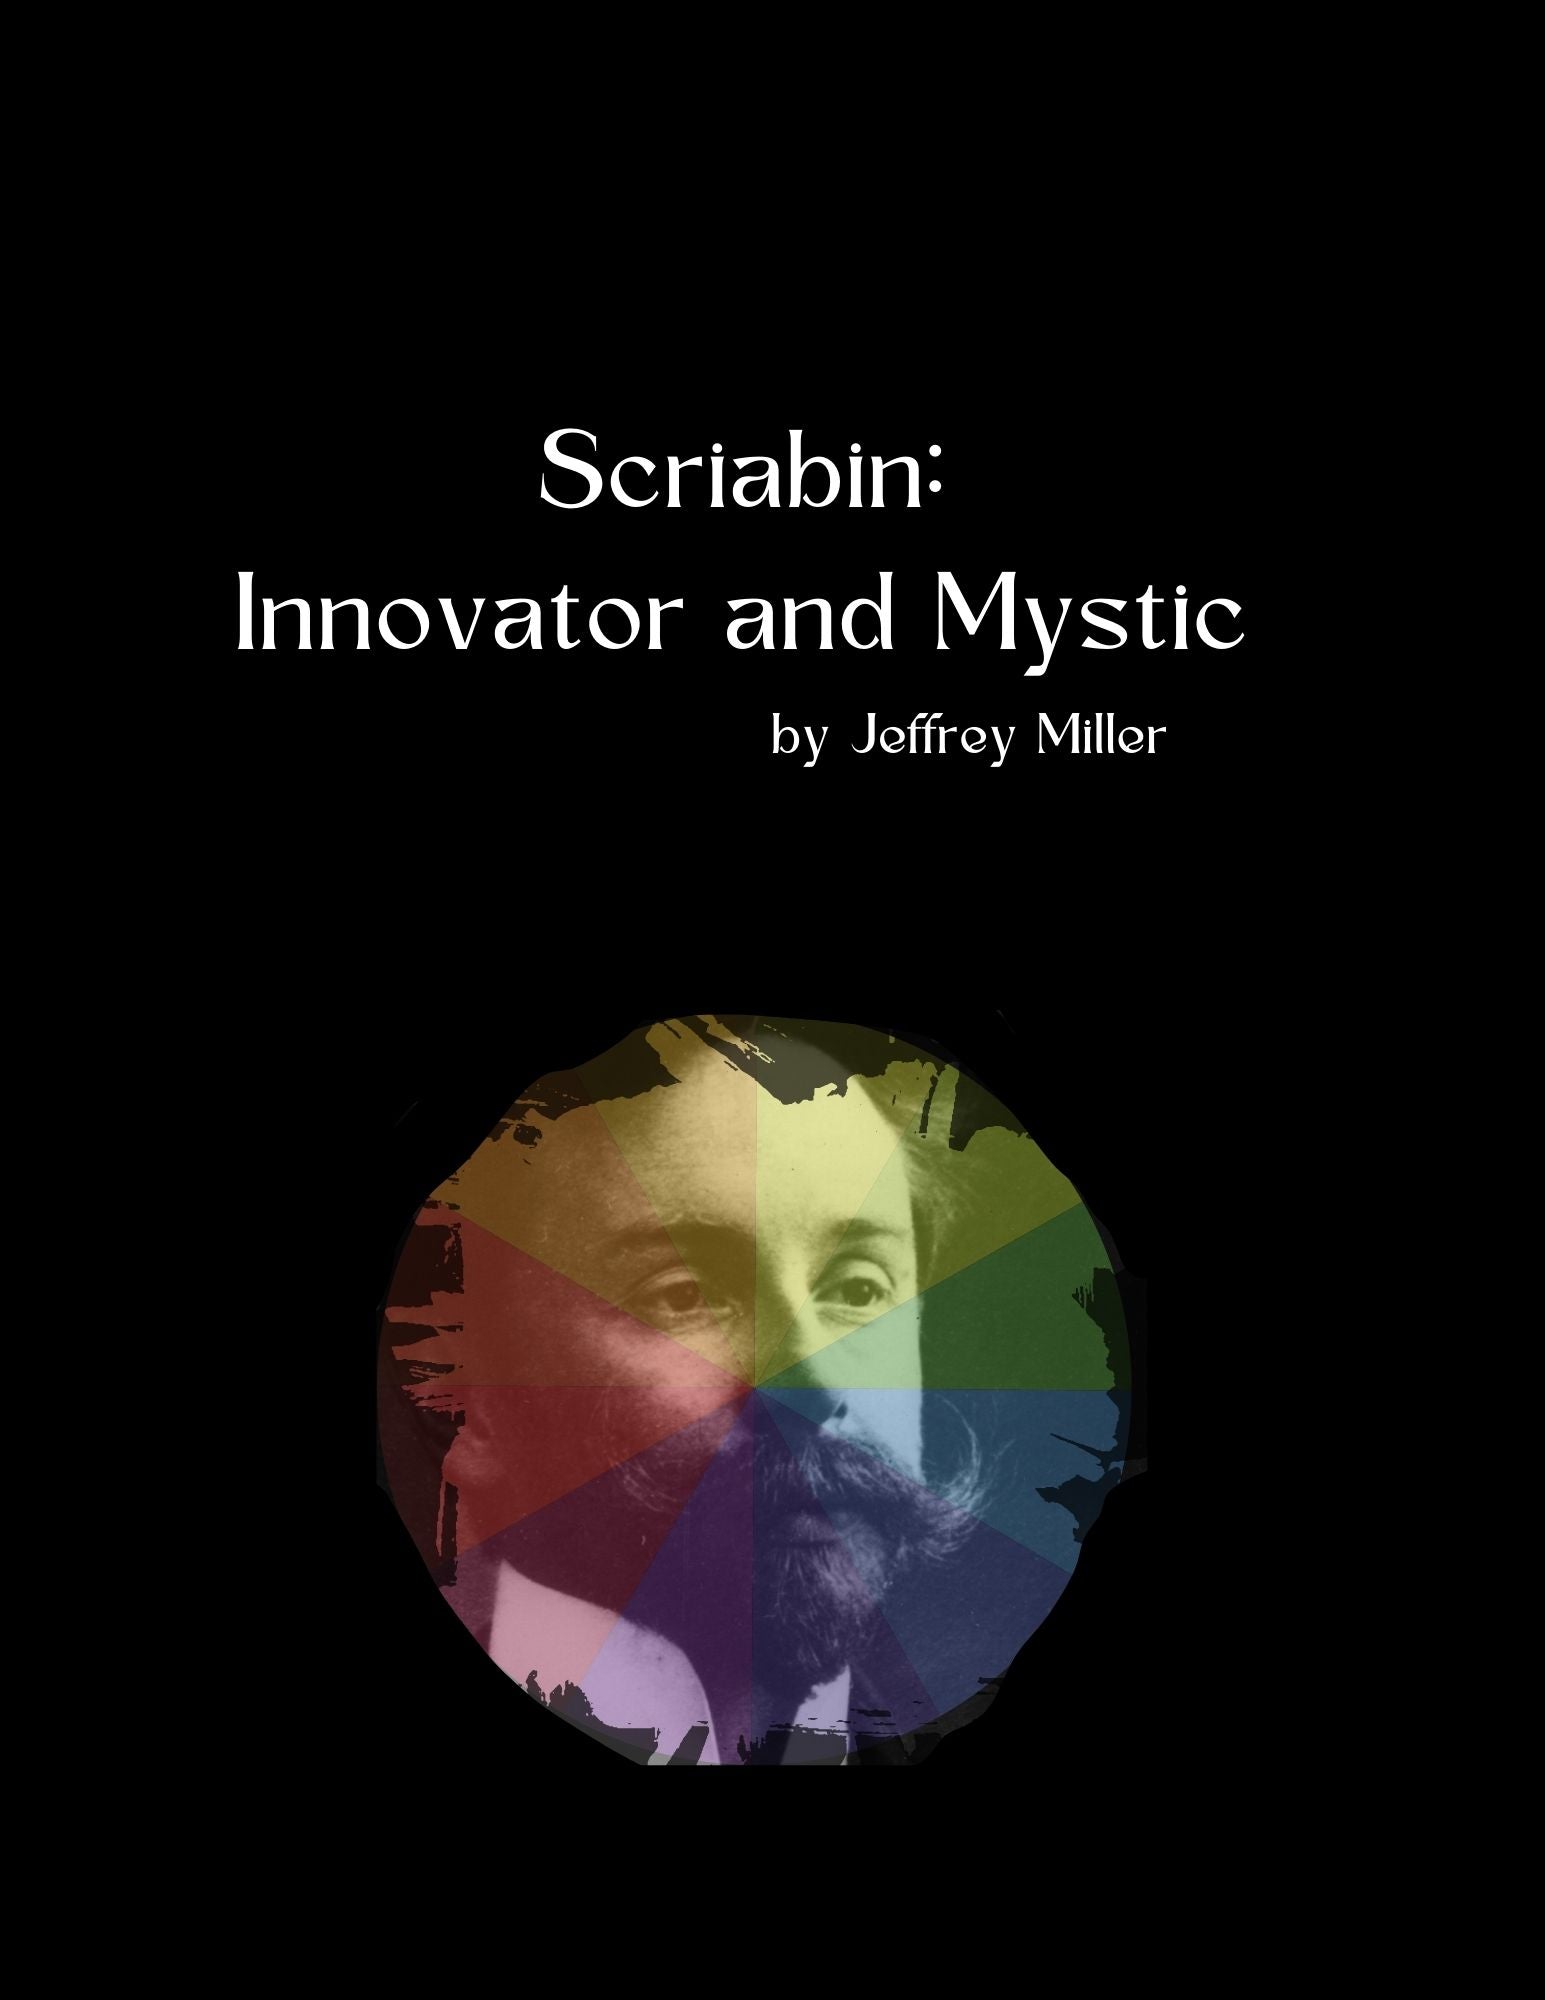 ESSAY: Scriabin - Innovator and Mystic